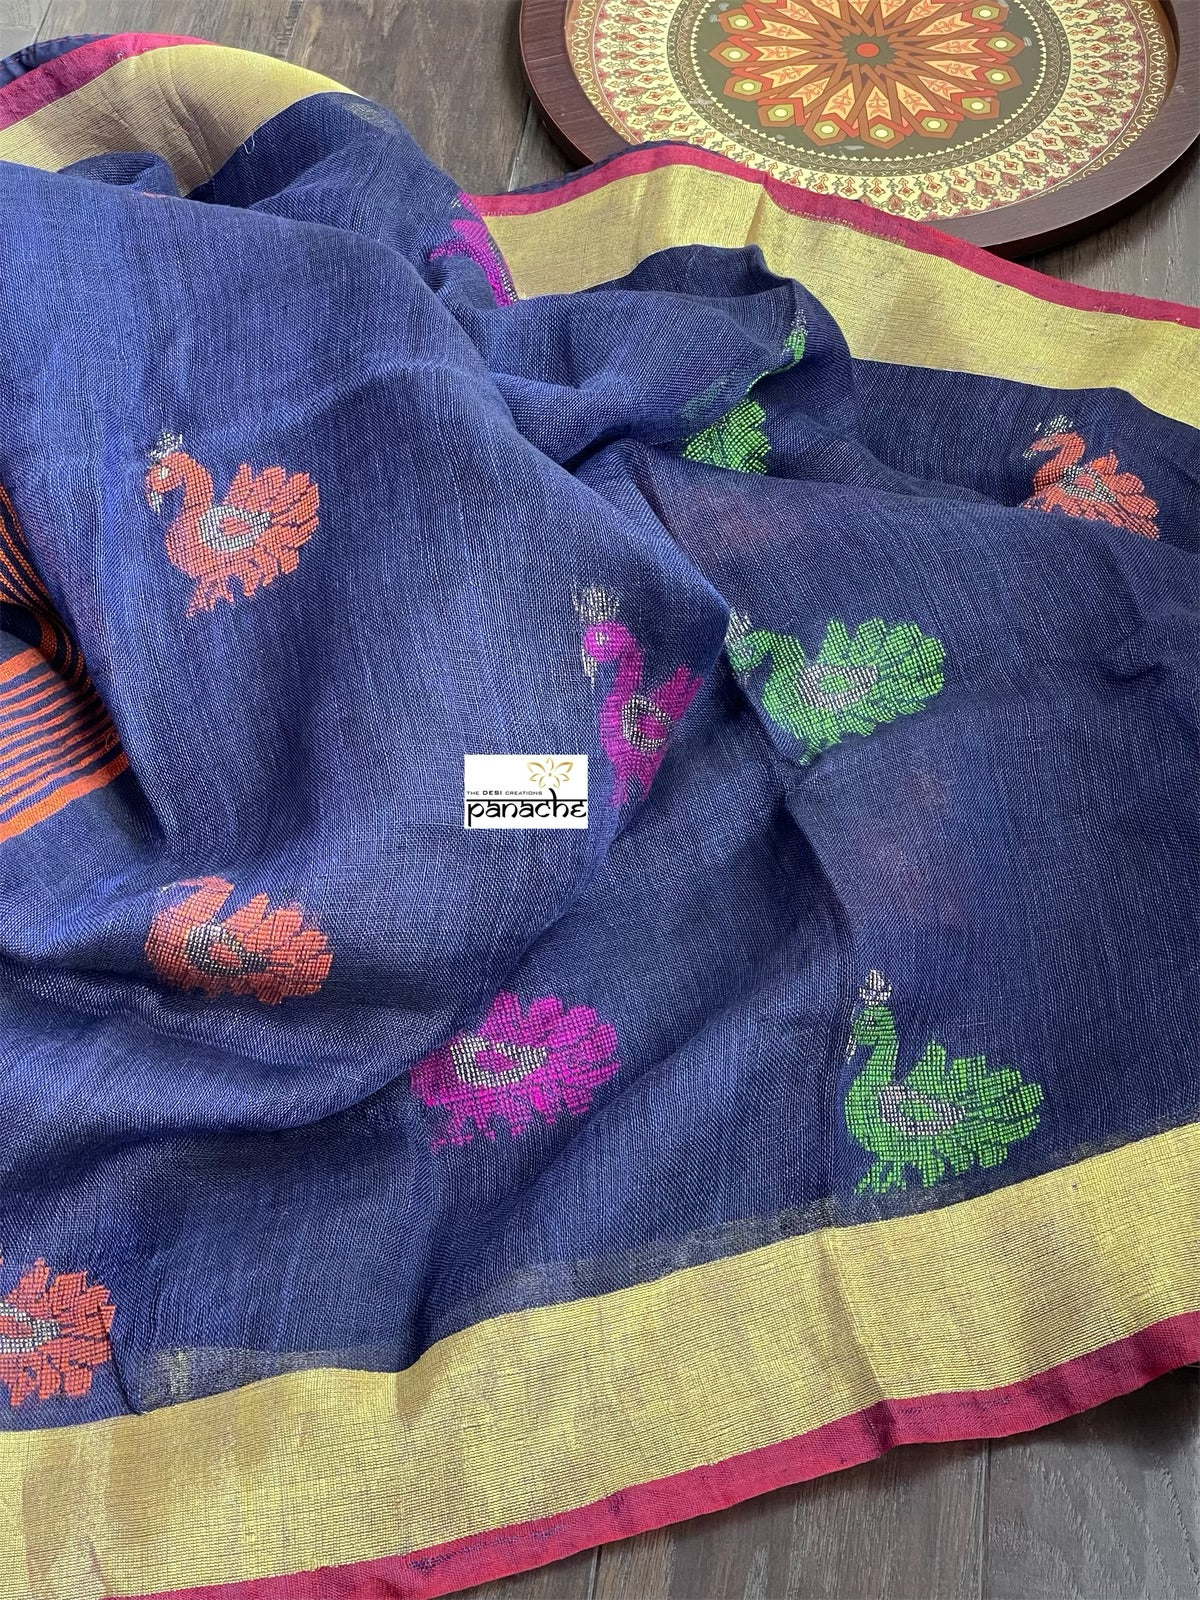 Handloom Banarasi Linen -  Navy Blue Zari woven